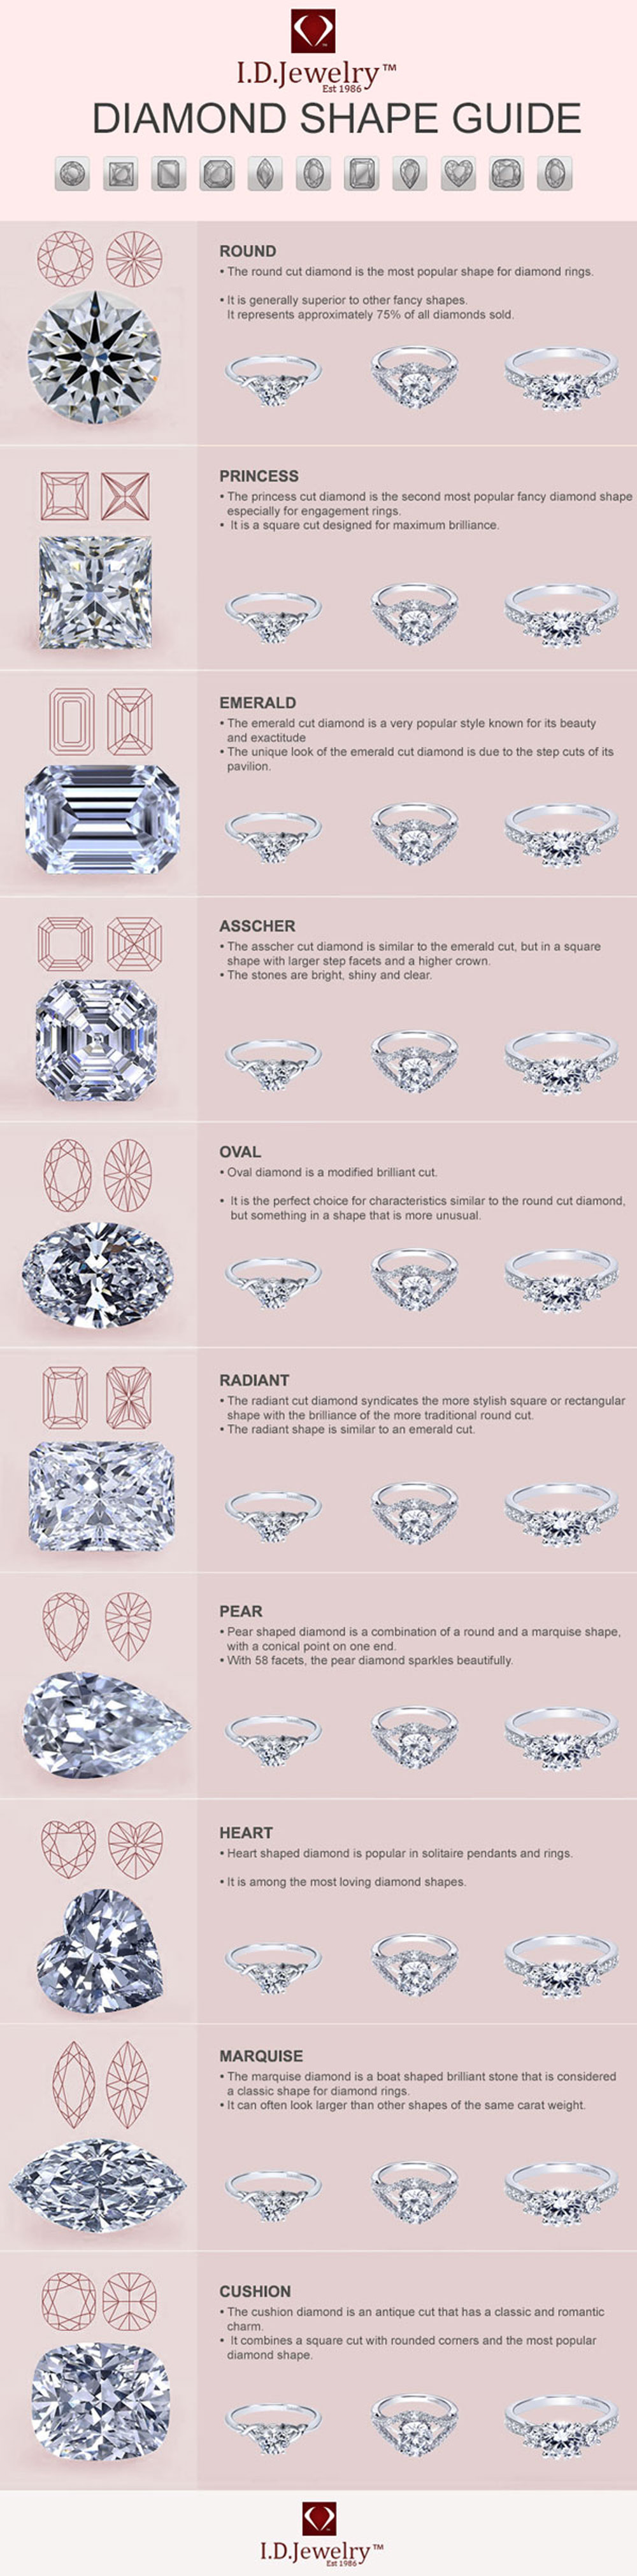 diamond shapes and names